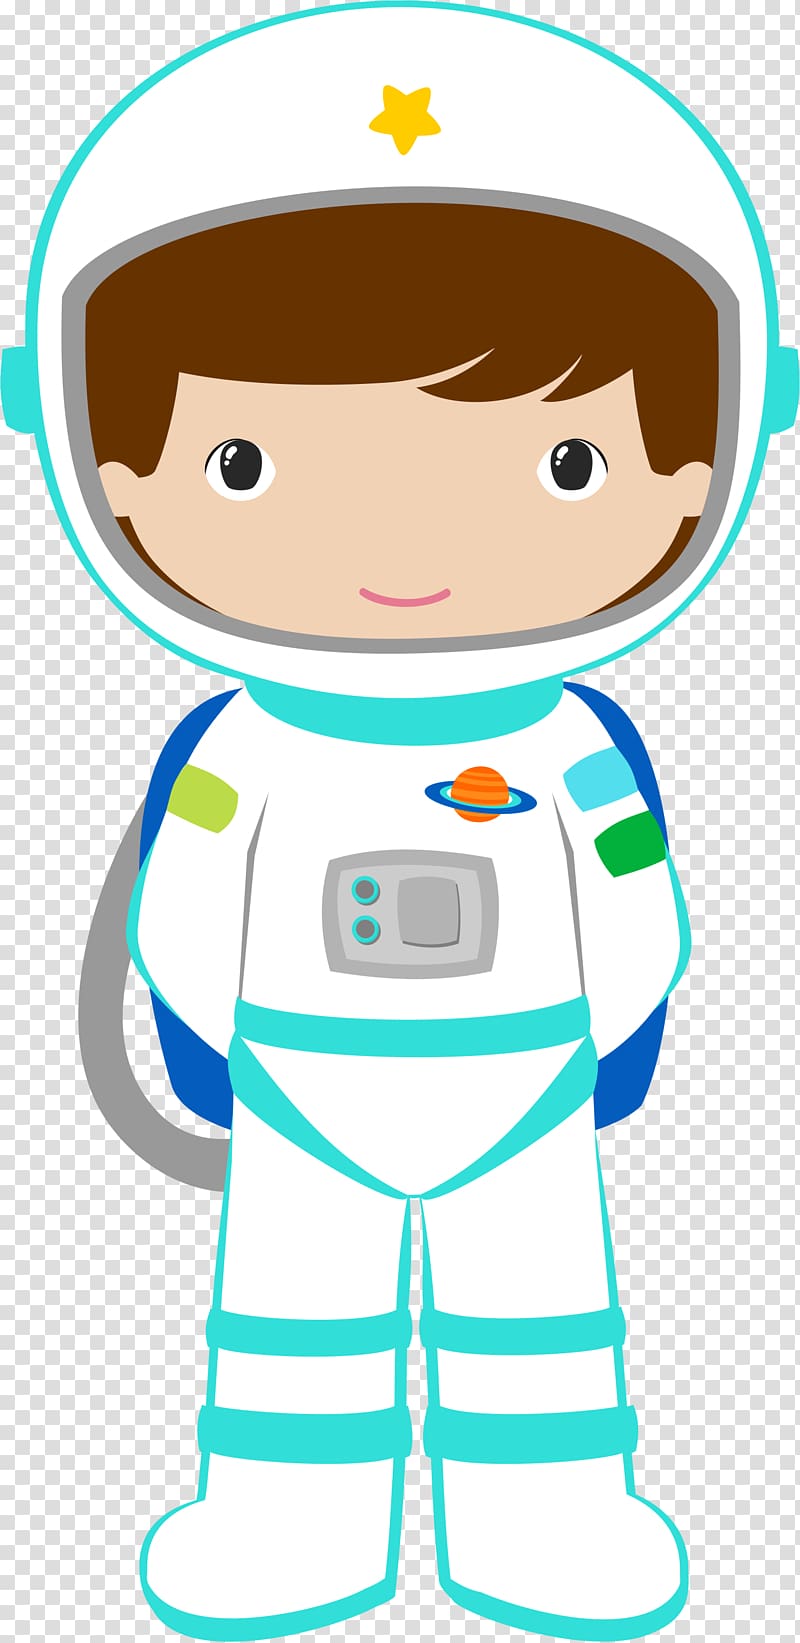 Astronaut clipart child.